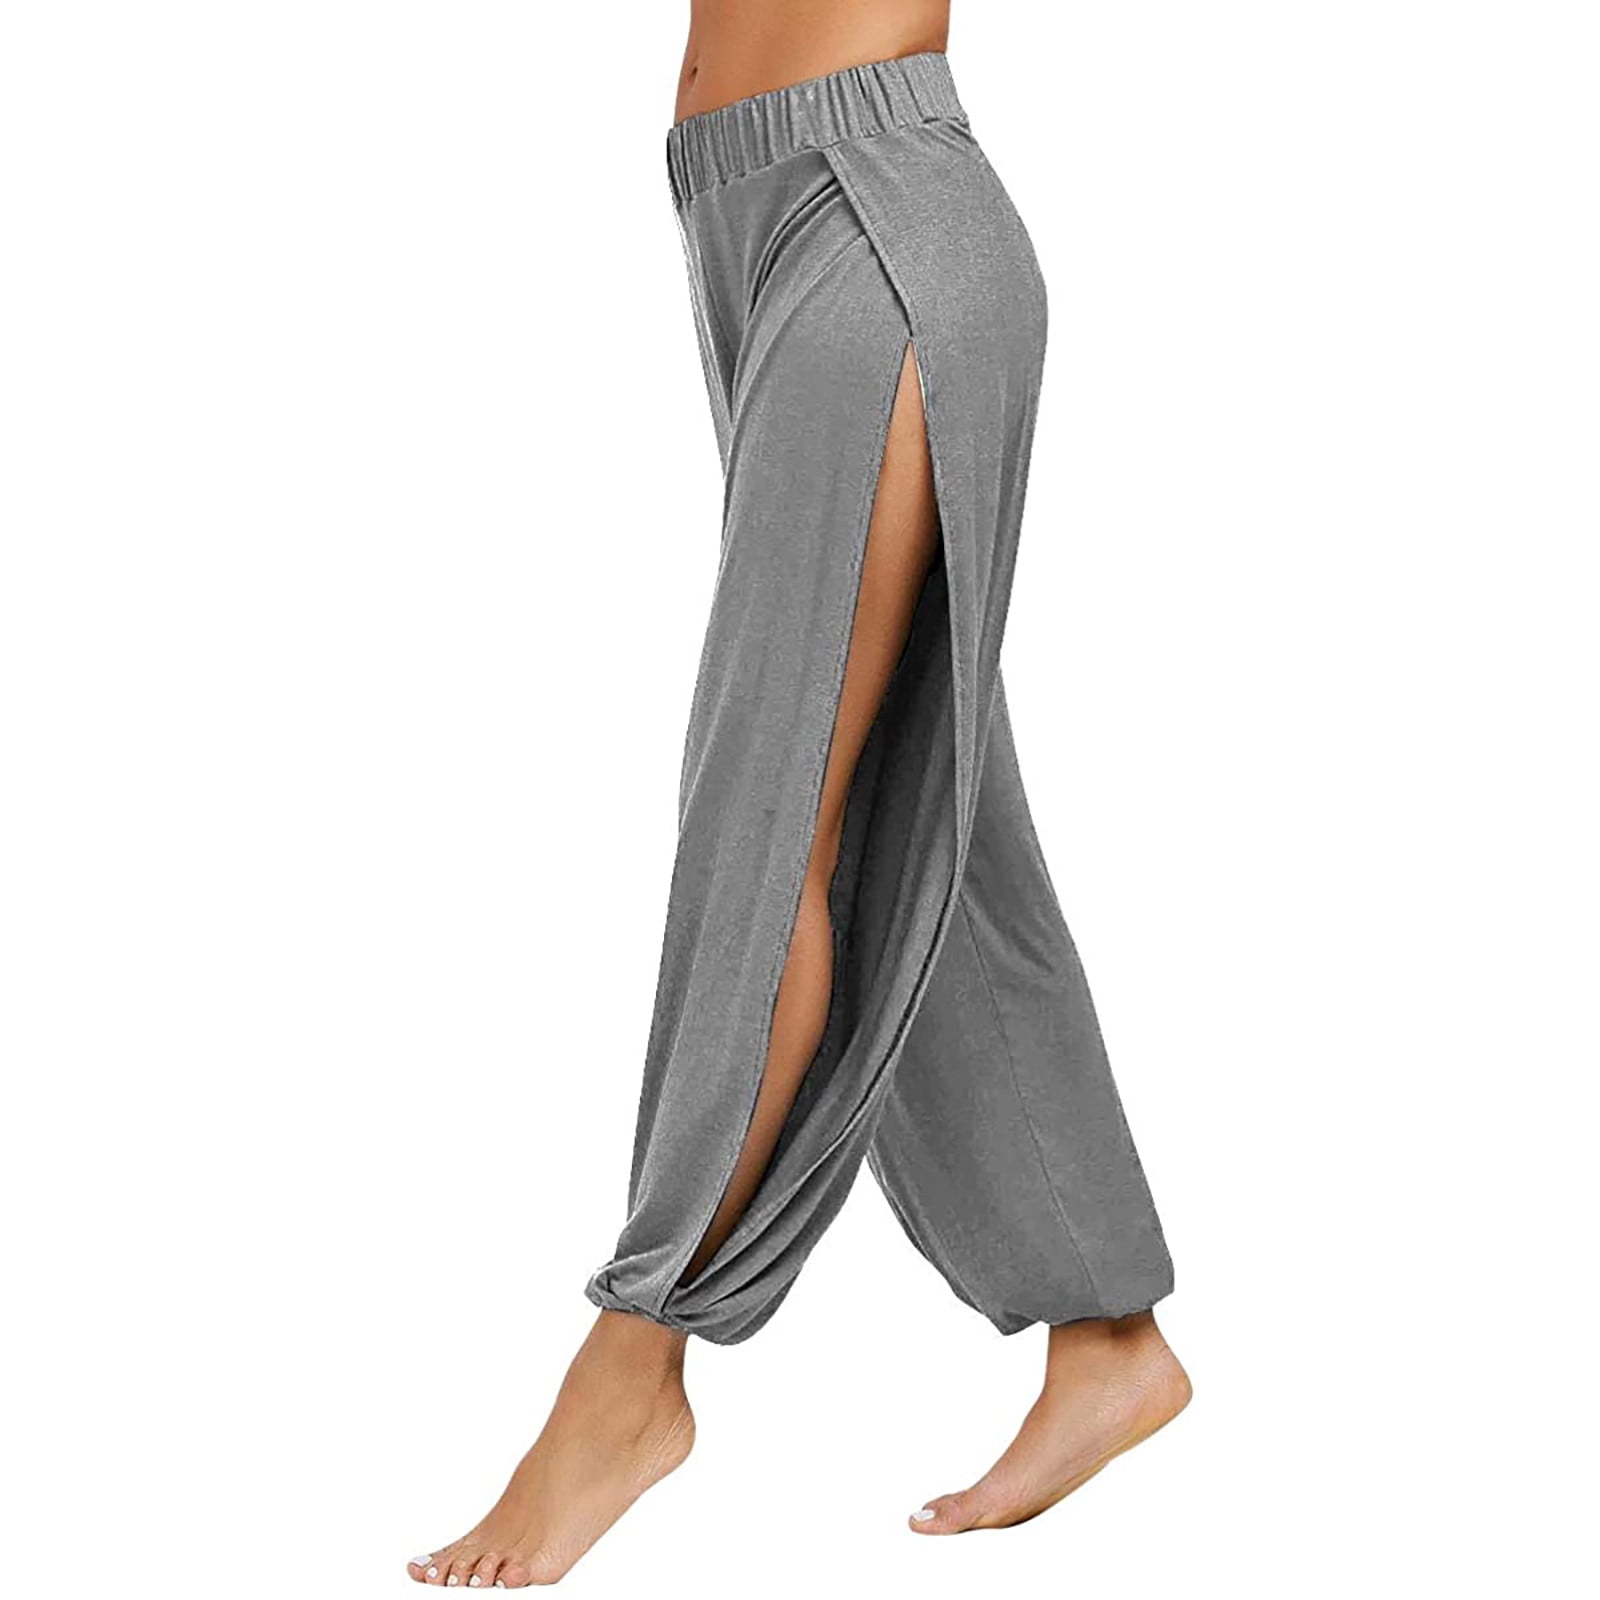 Harem pants, Relaxed fit yoga pants